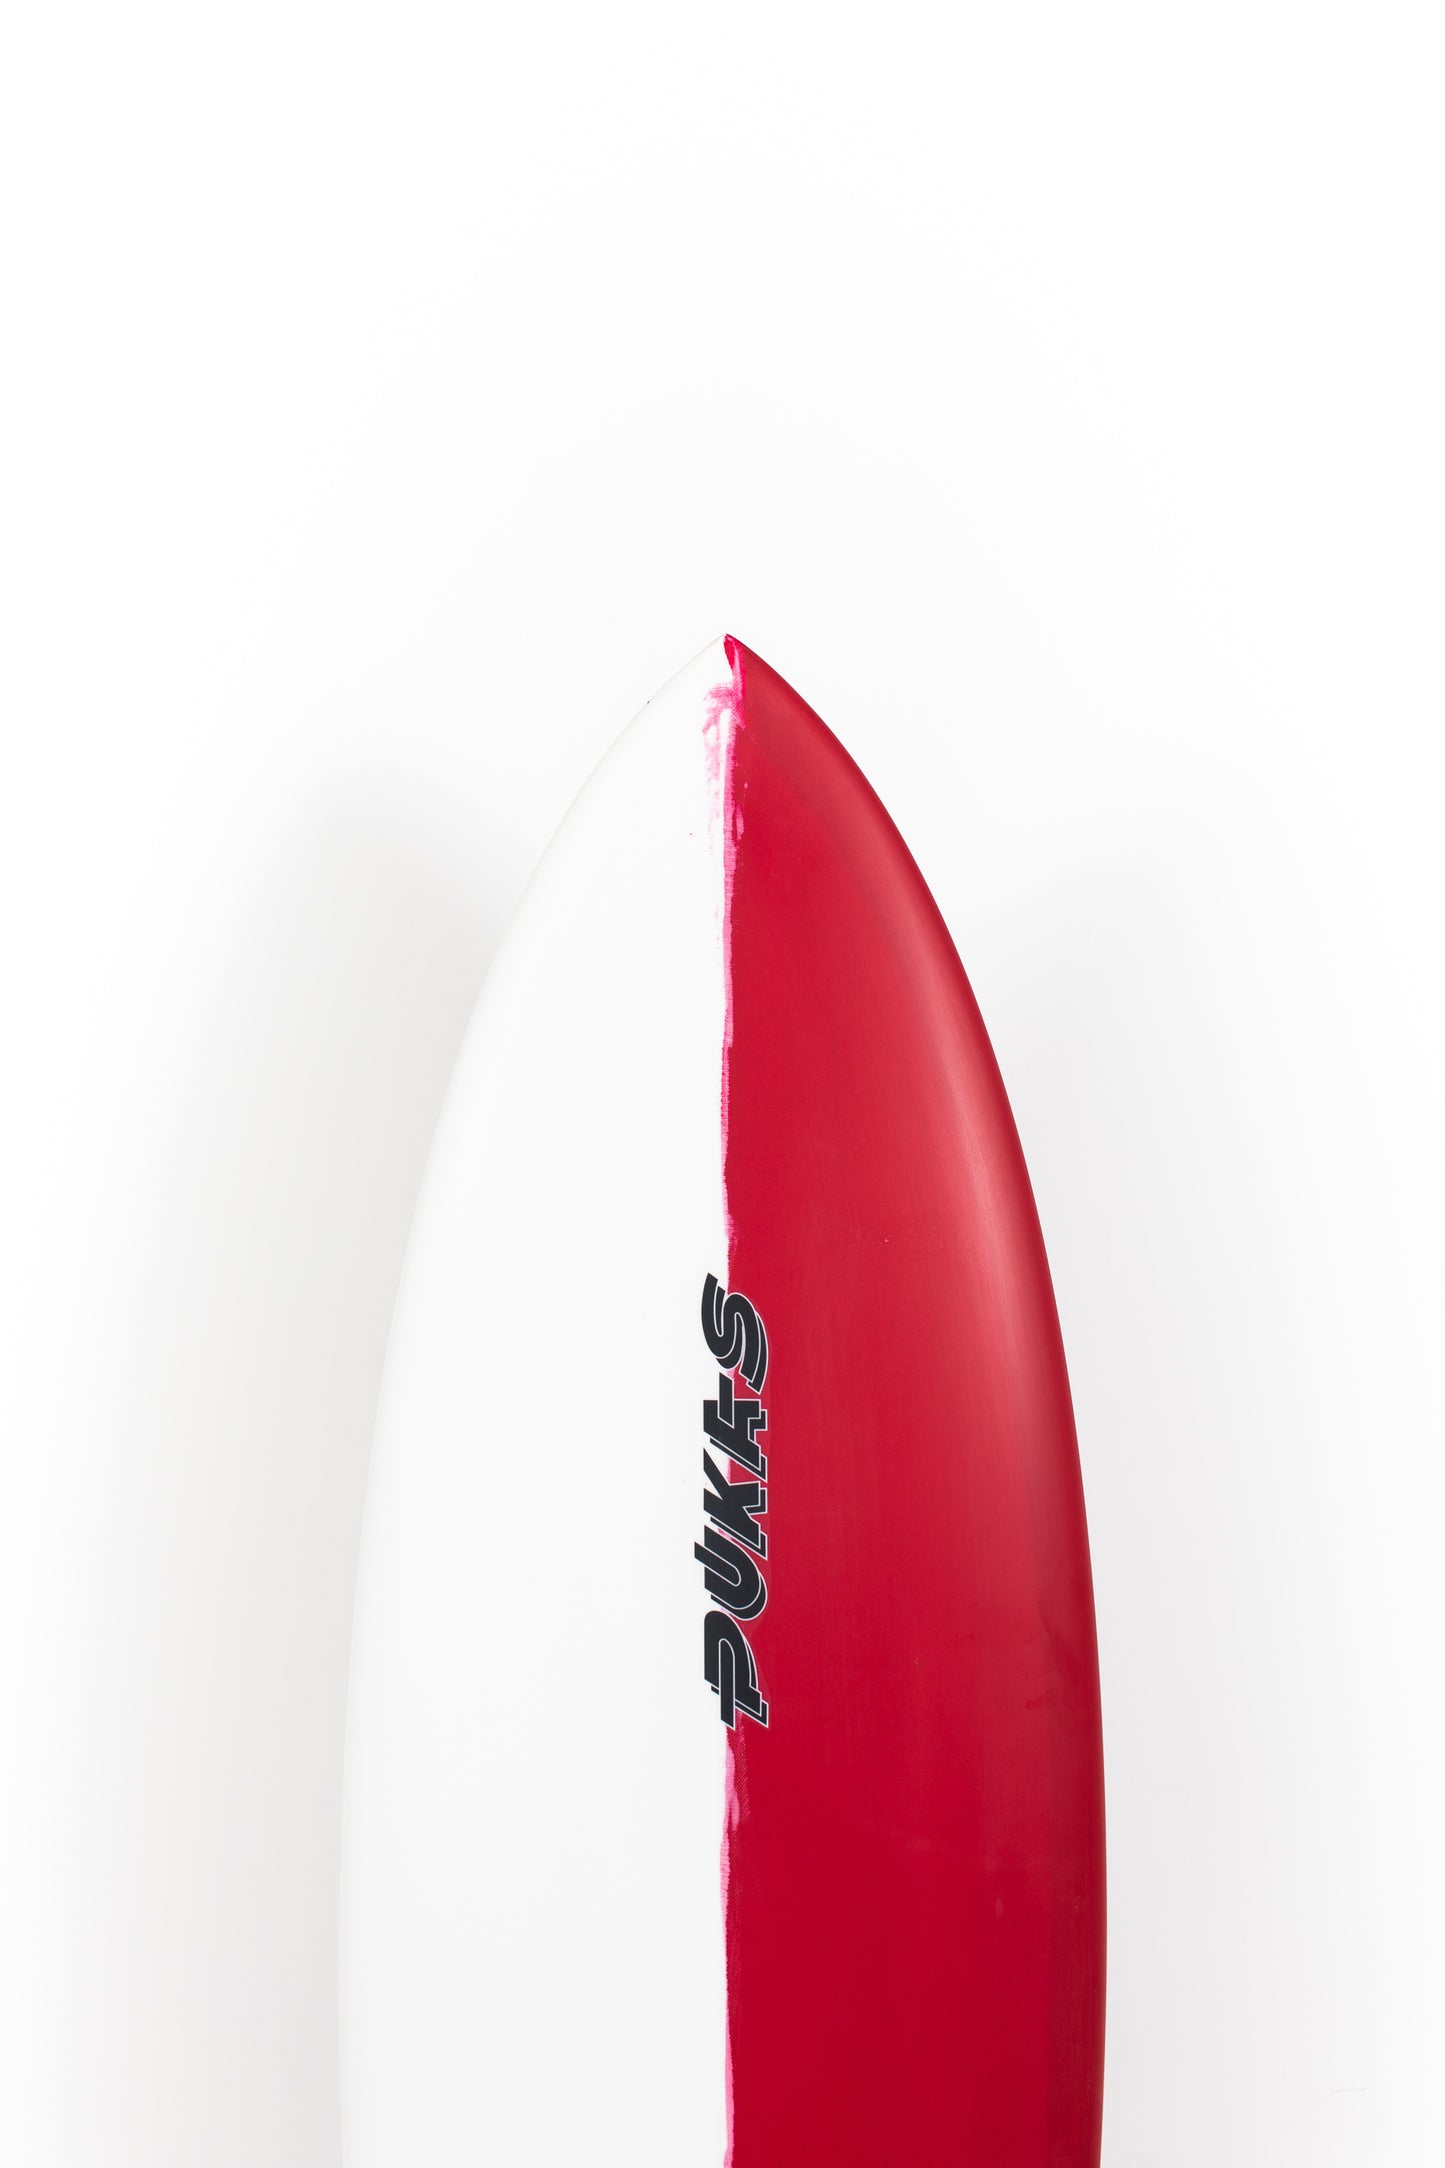 
                  
                    Pukas Surf Shop - Pukas Surfboard - ORIGINAL 69 by Axel Lorentz - 5’10” x 20,25 x 2,5 - 32,4L - AX07926
                  
                